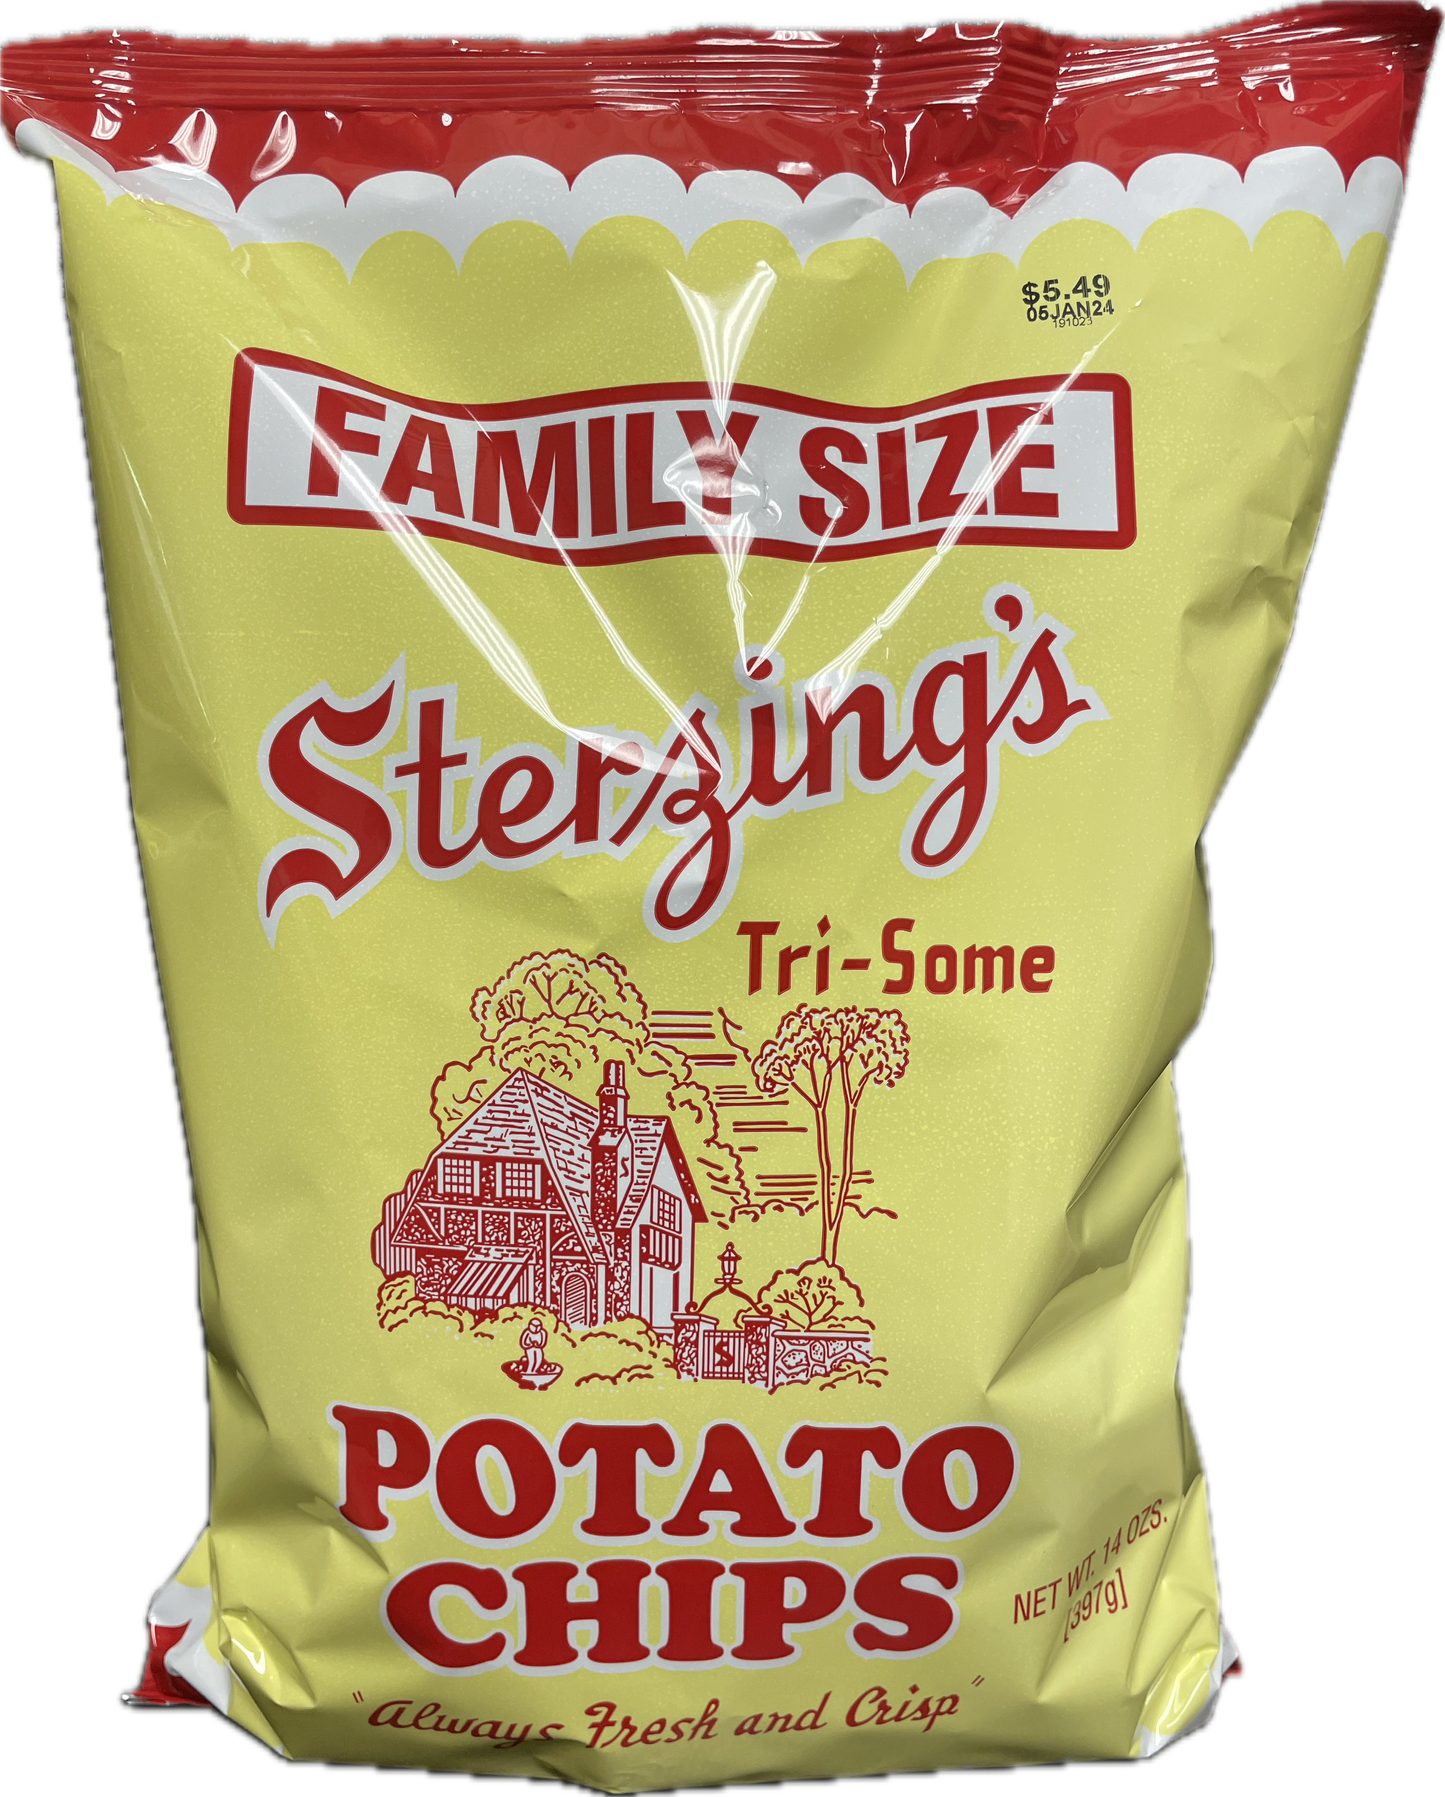 Sterzing’s Potato Chips - Original Flavor - Family Size 14 oz Bag